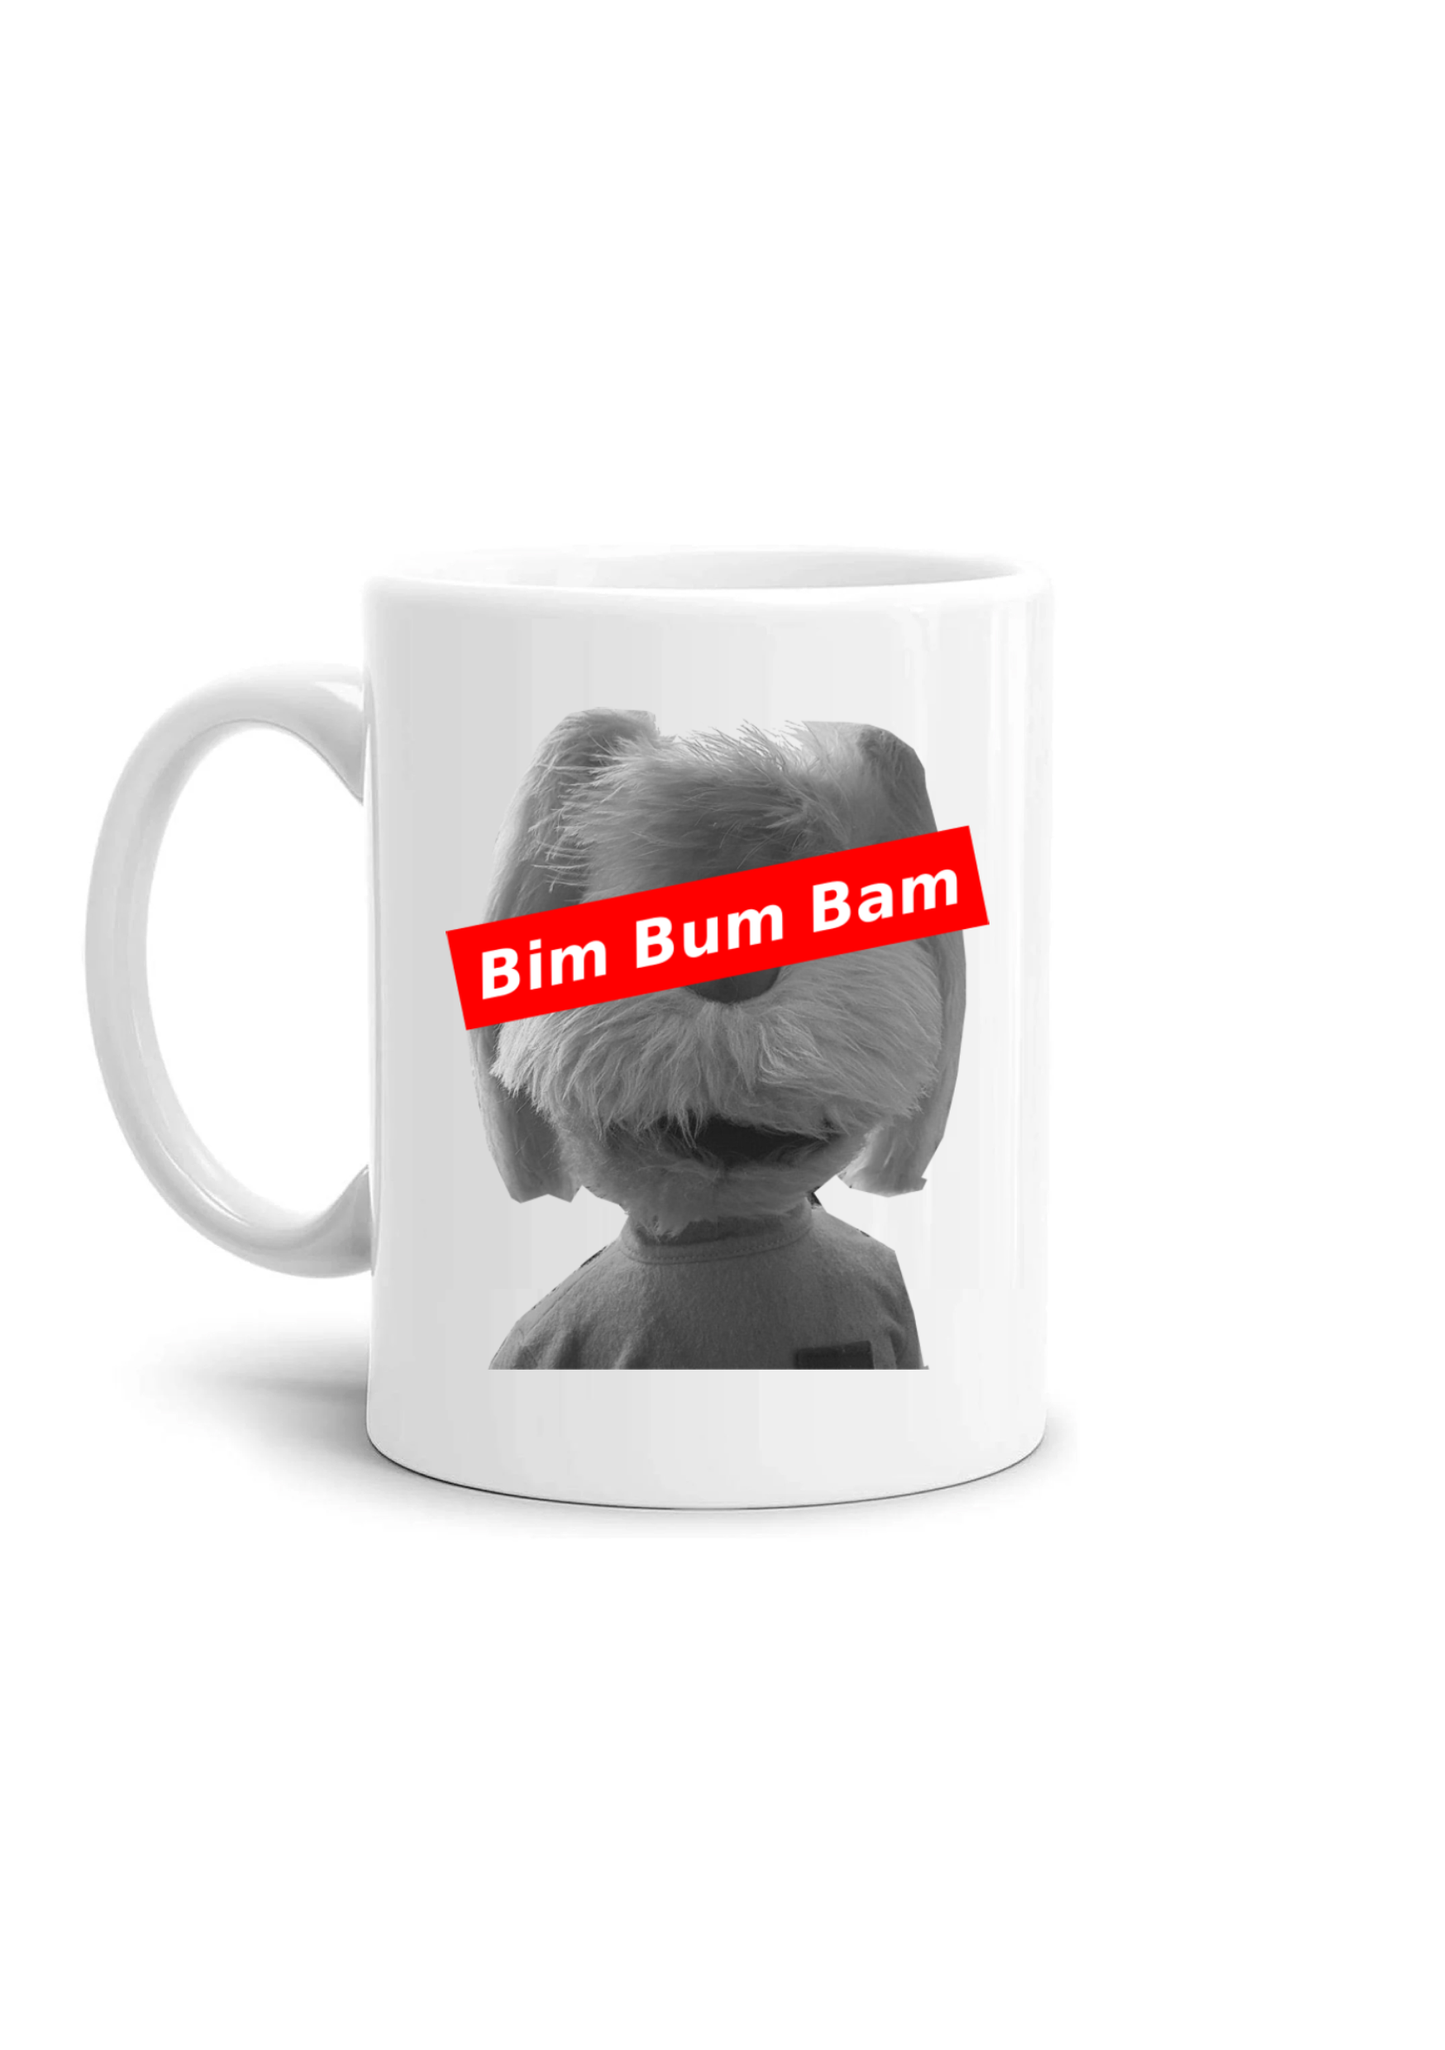 Mug-bim bum bam 90s television cup